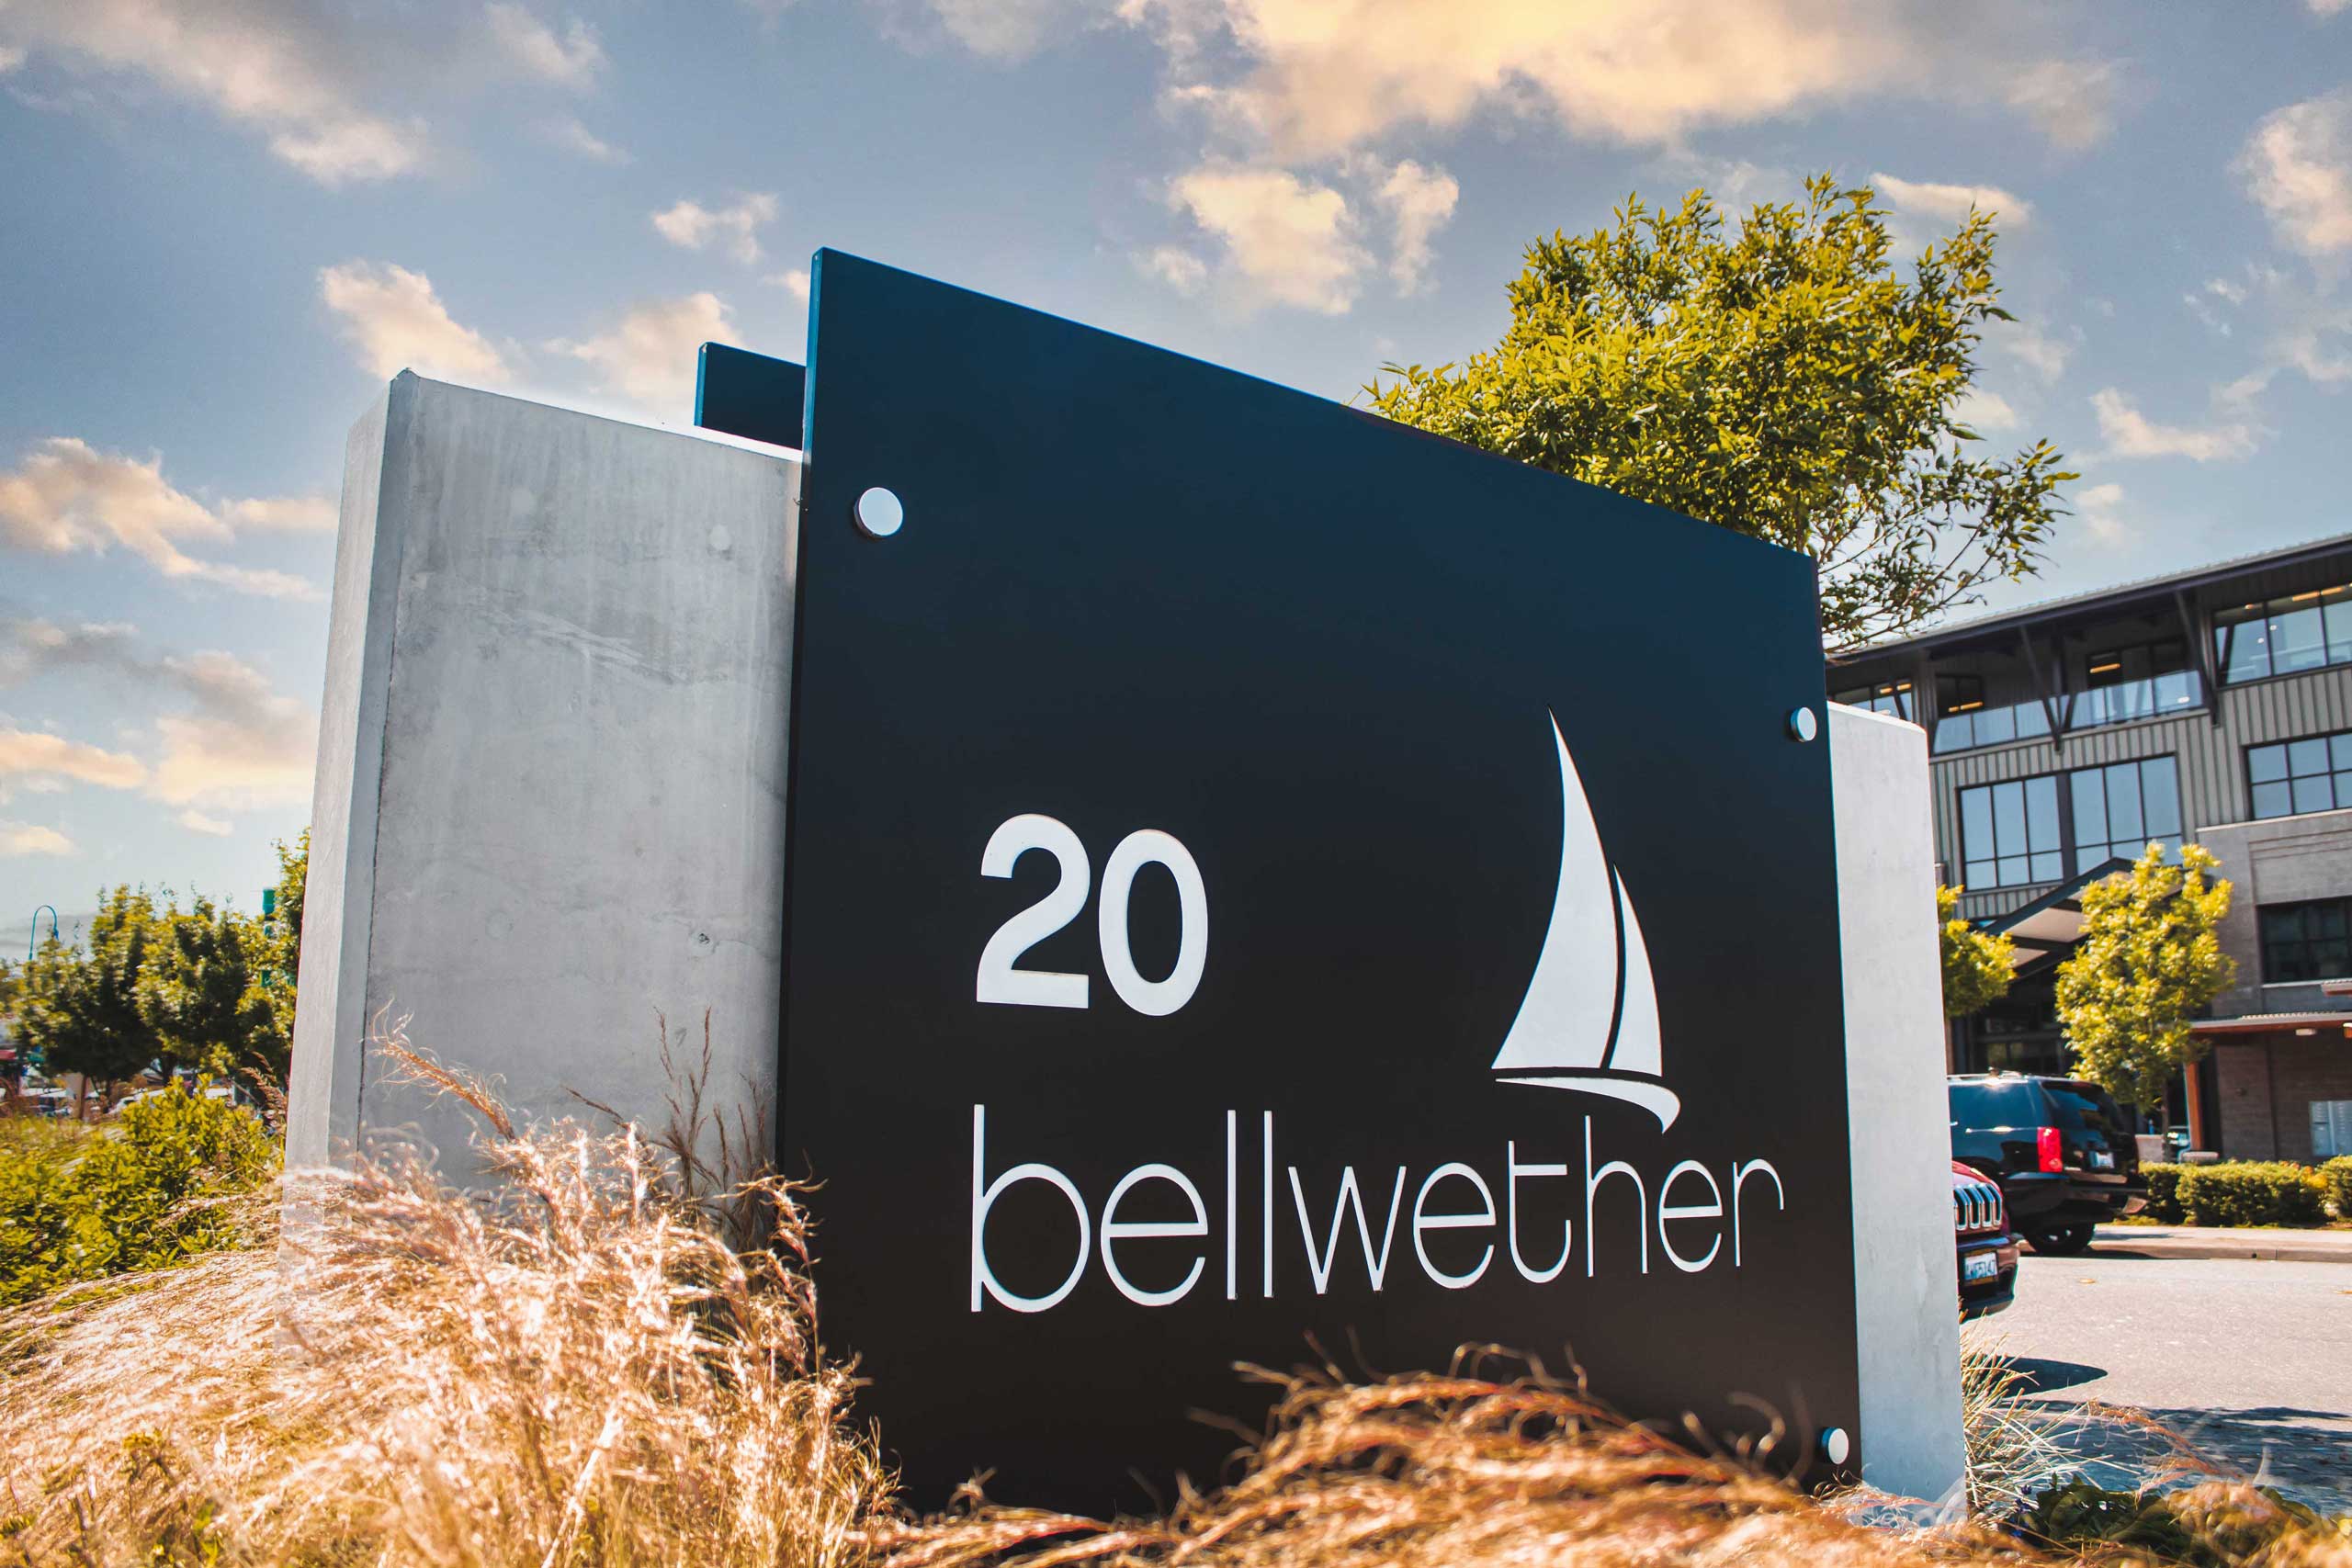 development-20-bellwether-wayfinding-monument-sign